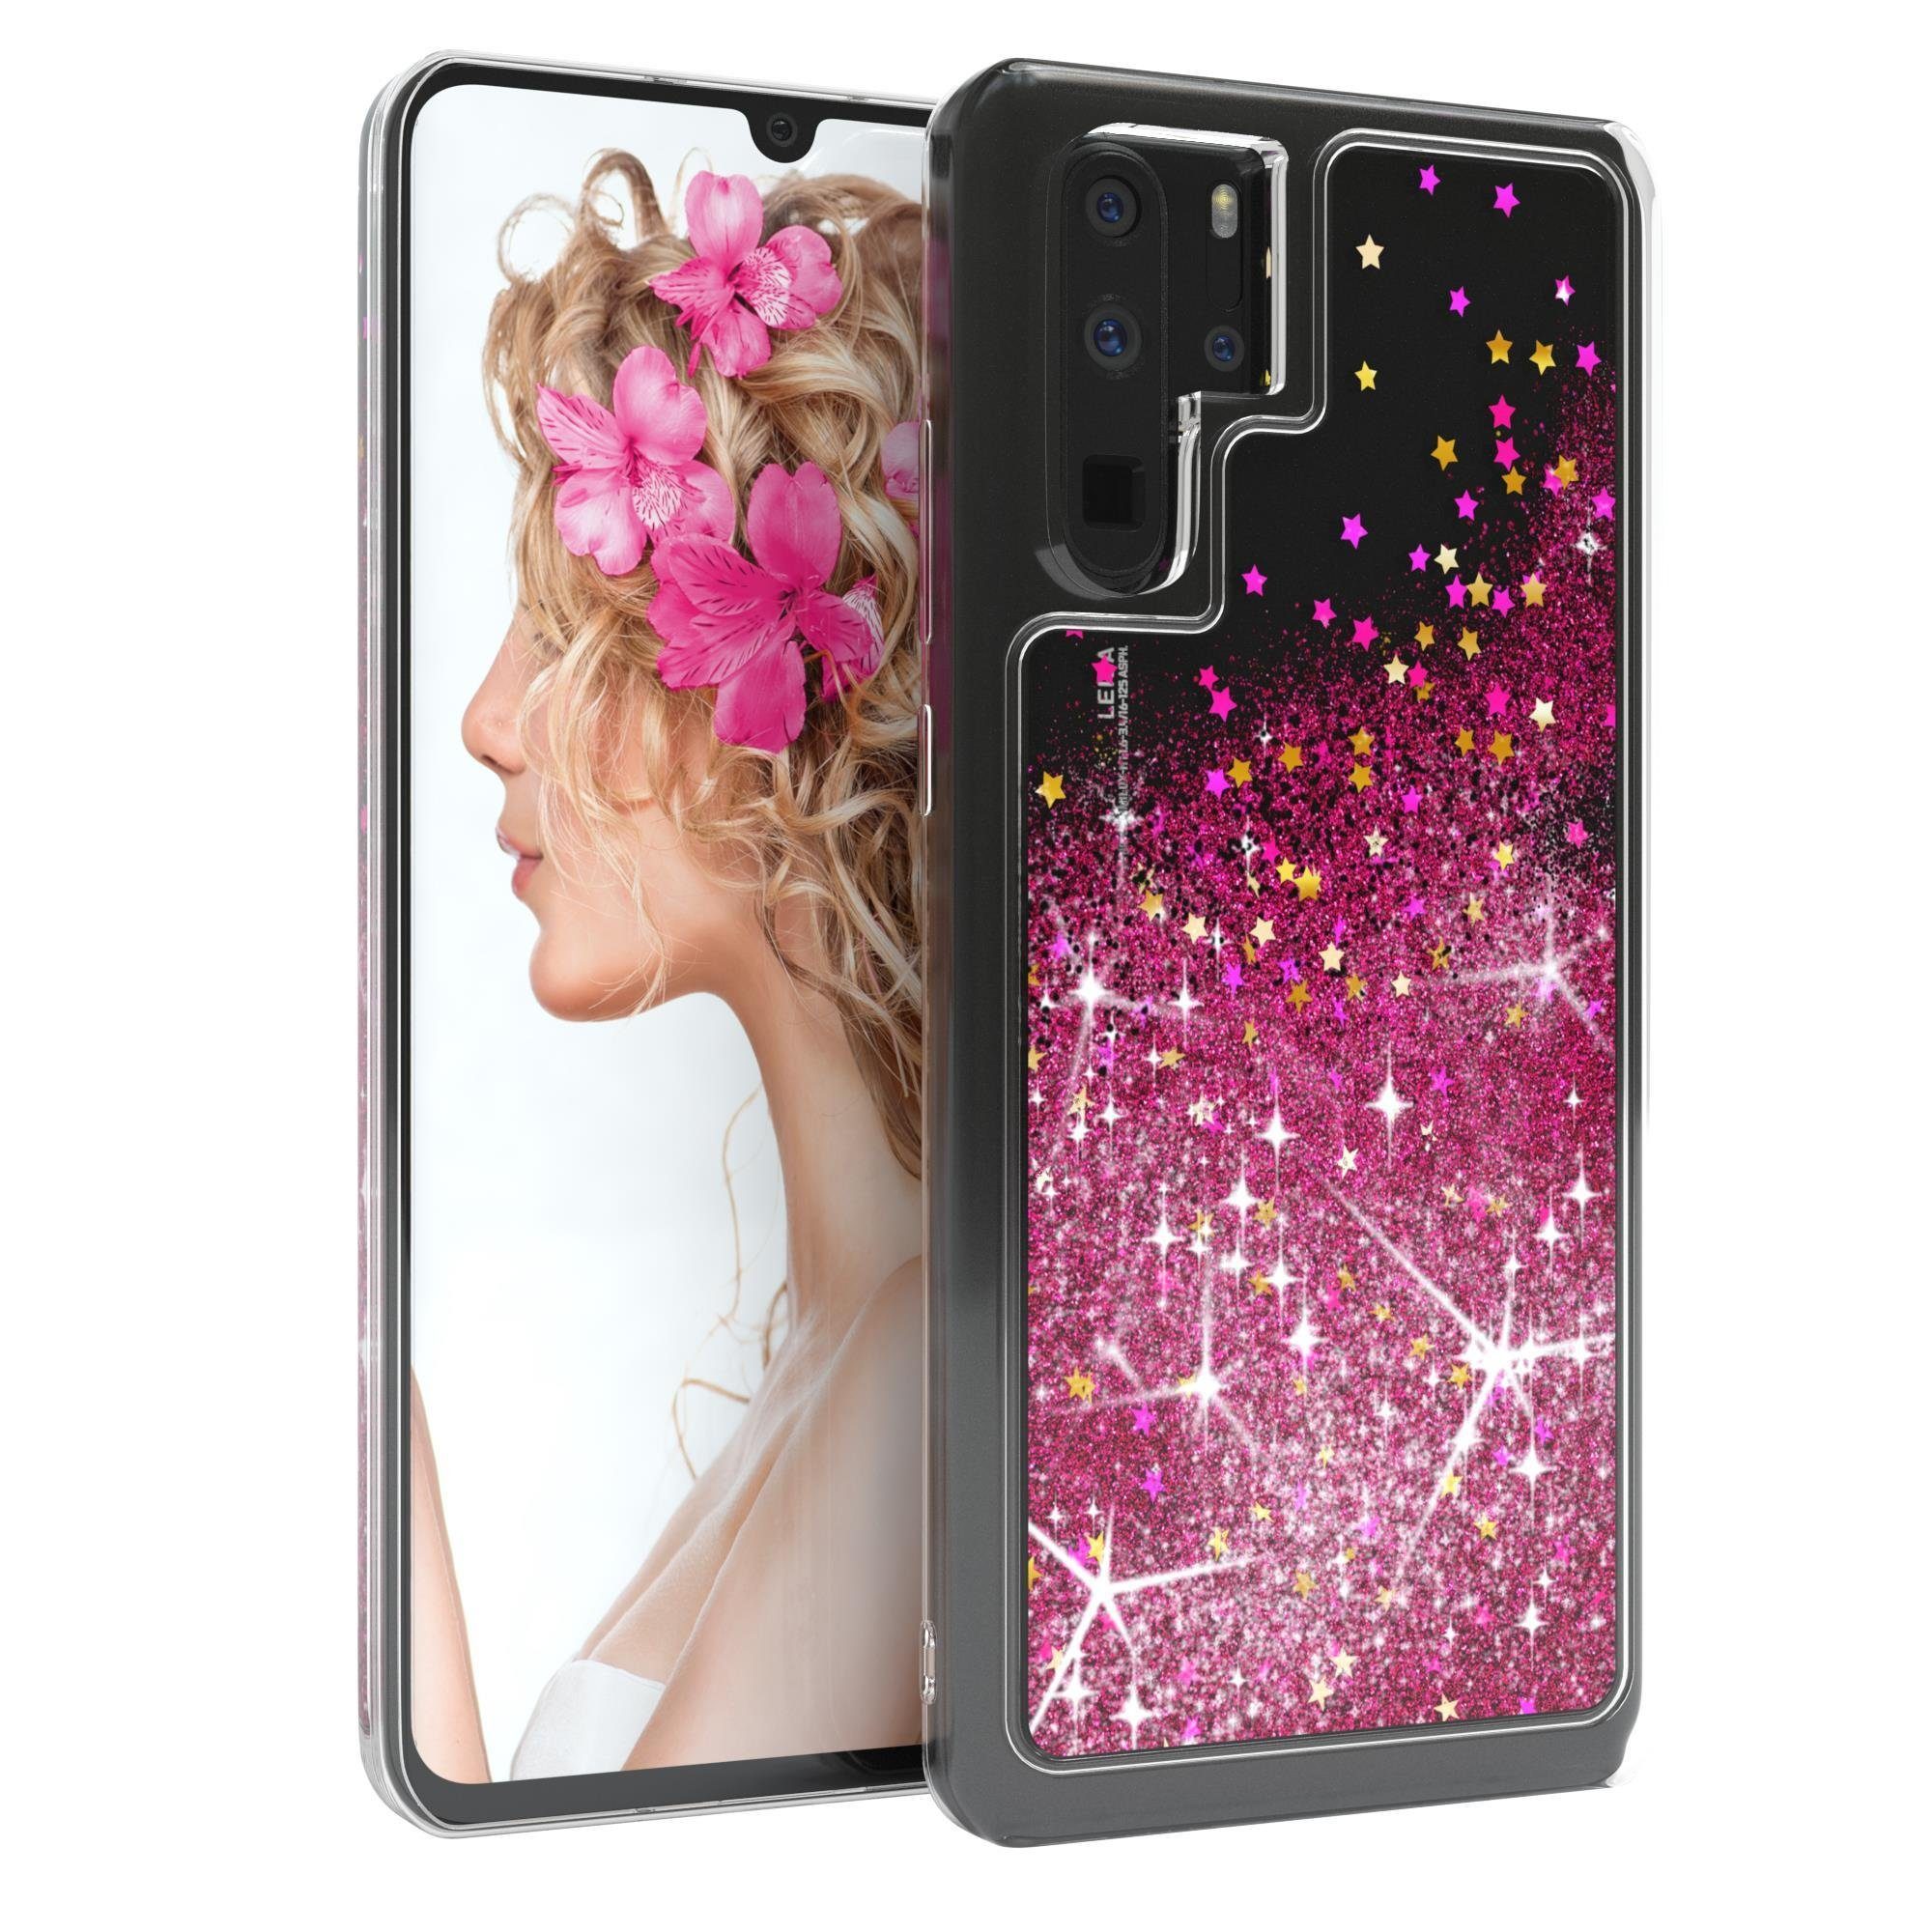 EAZY CASE Handyhülle Liquid Glittery Case für Huawei P30 Pro 6,47 Zoll, Glitzerhülle Shiny Slimcover stoßfest Durchsichtig Bumper Case Pink